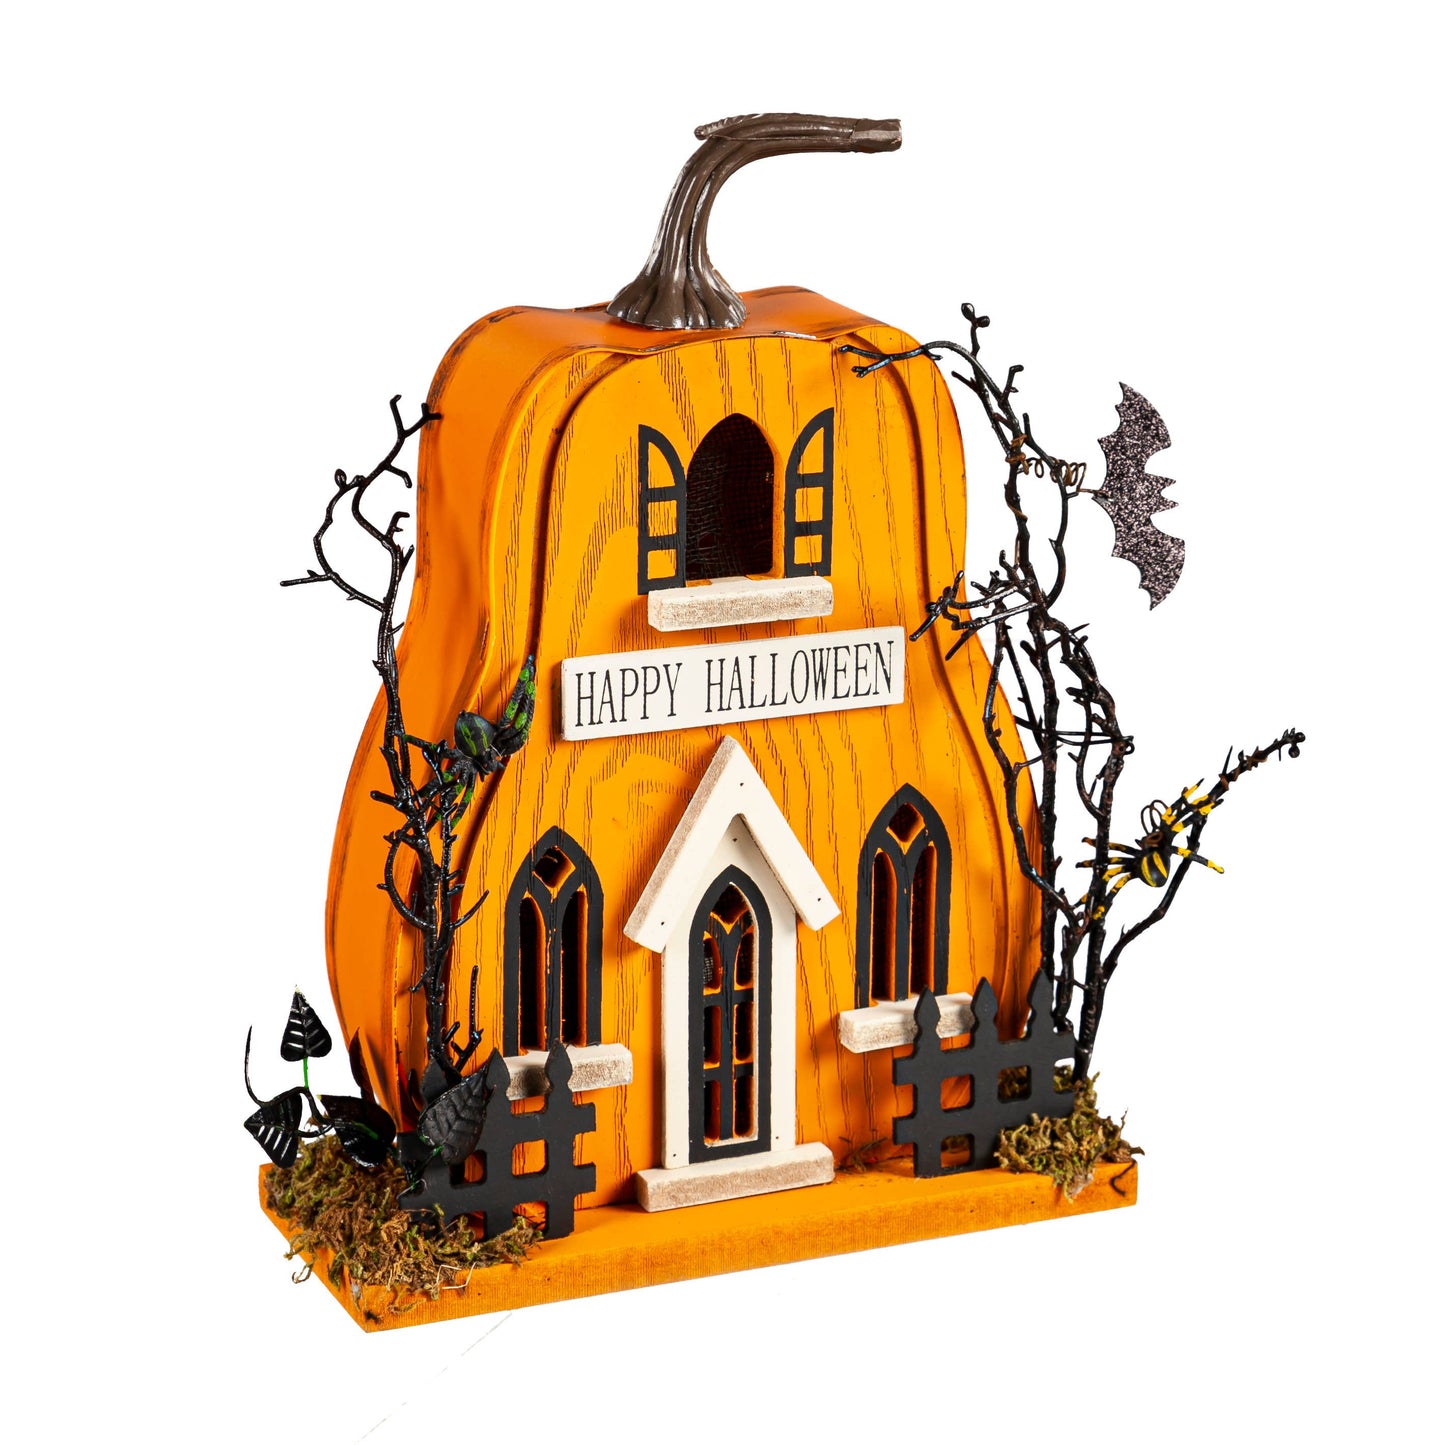 LED Wood "Happy Halloween" Haunted Pumpkin House Table Décor